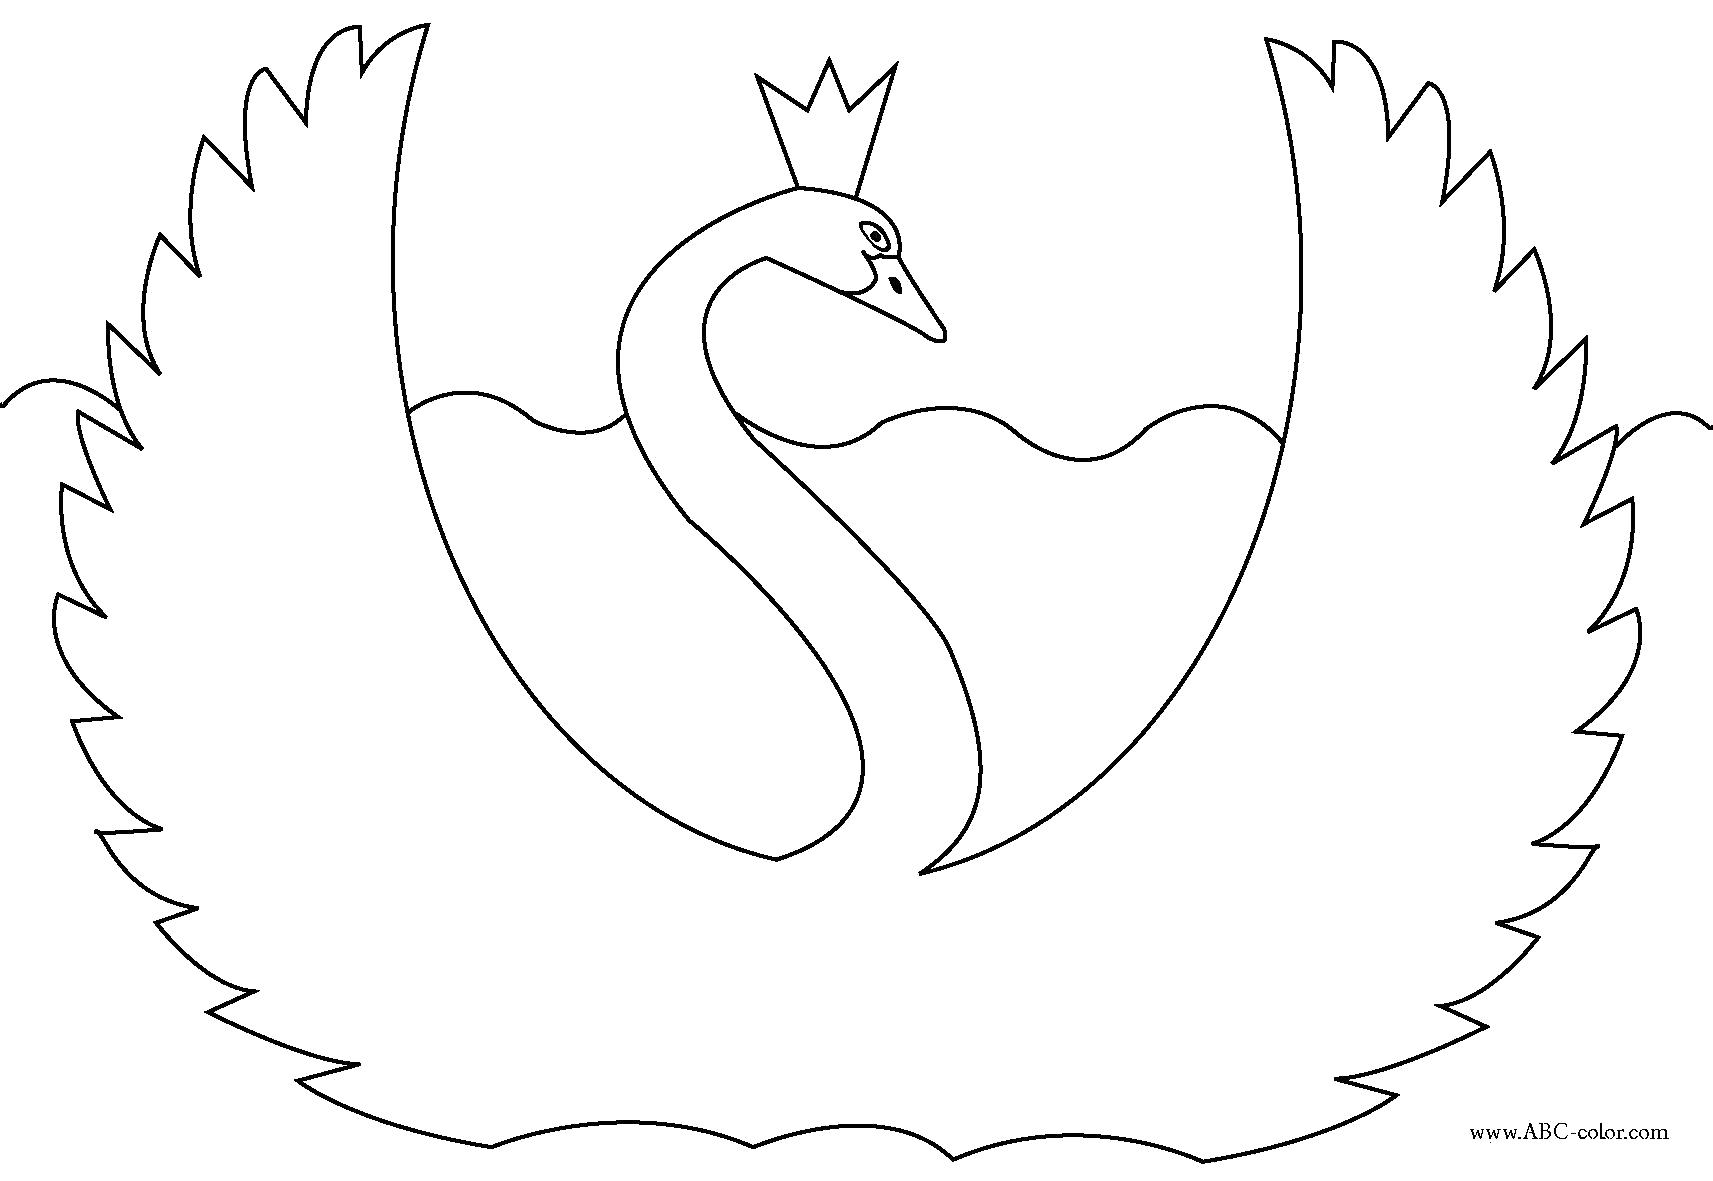 Сказка о царе Салтане раскраска лебедь